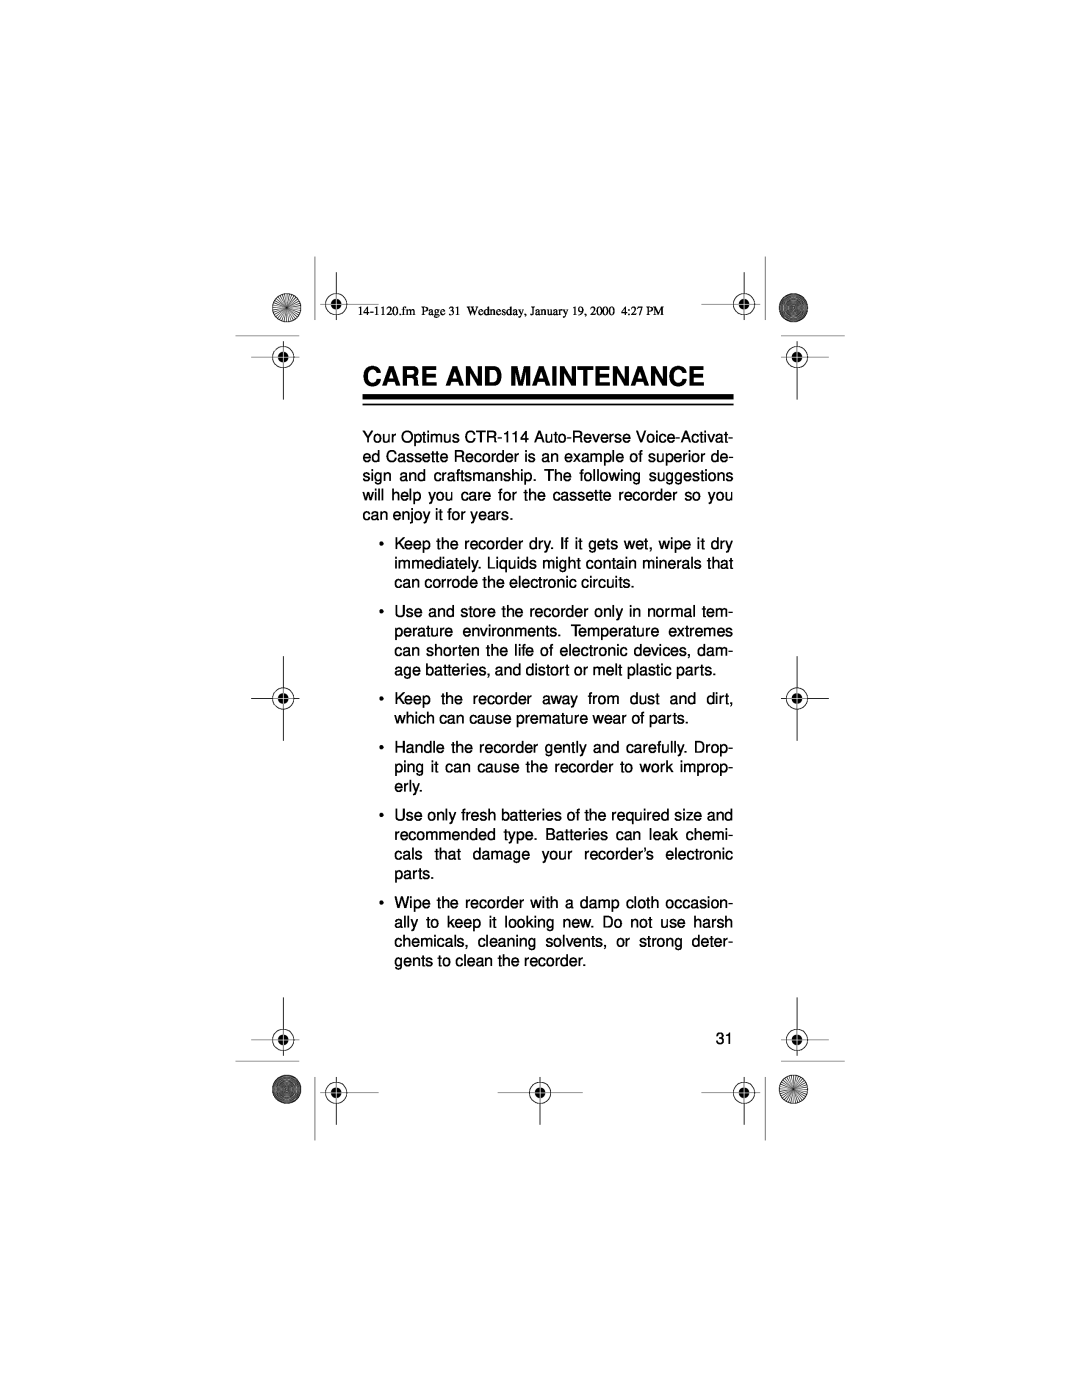 Panasonic CTR-114 owner manual Care And Maintenance 